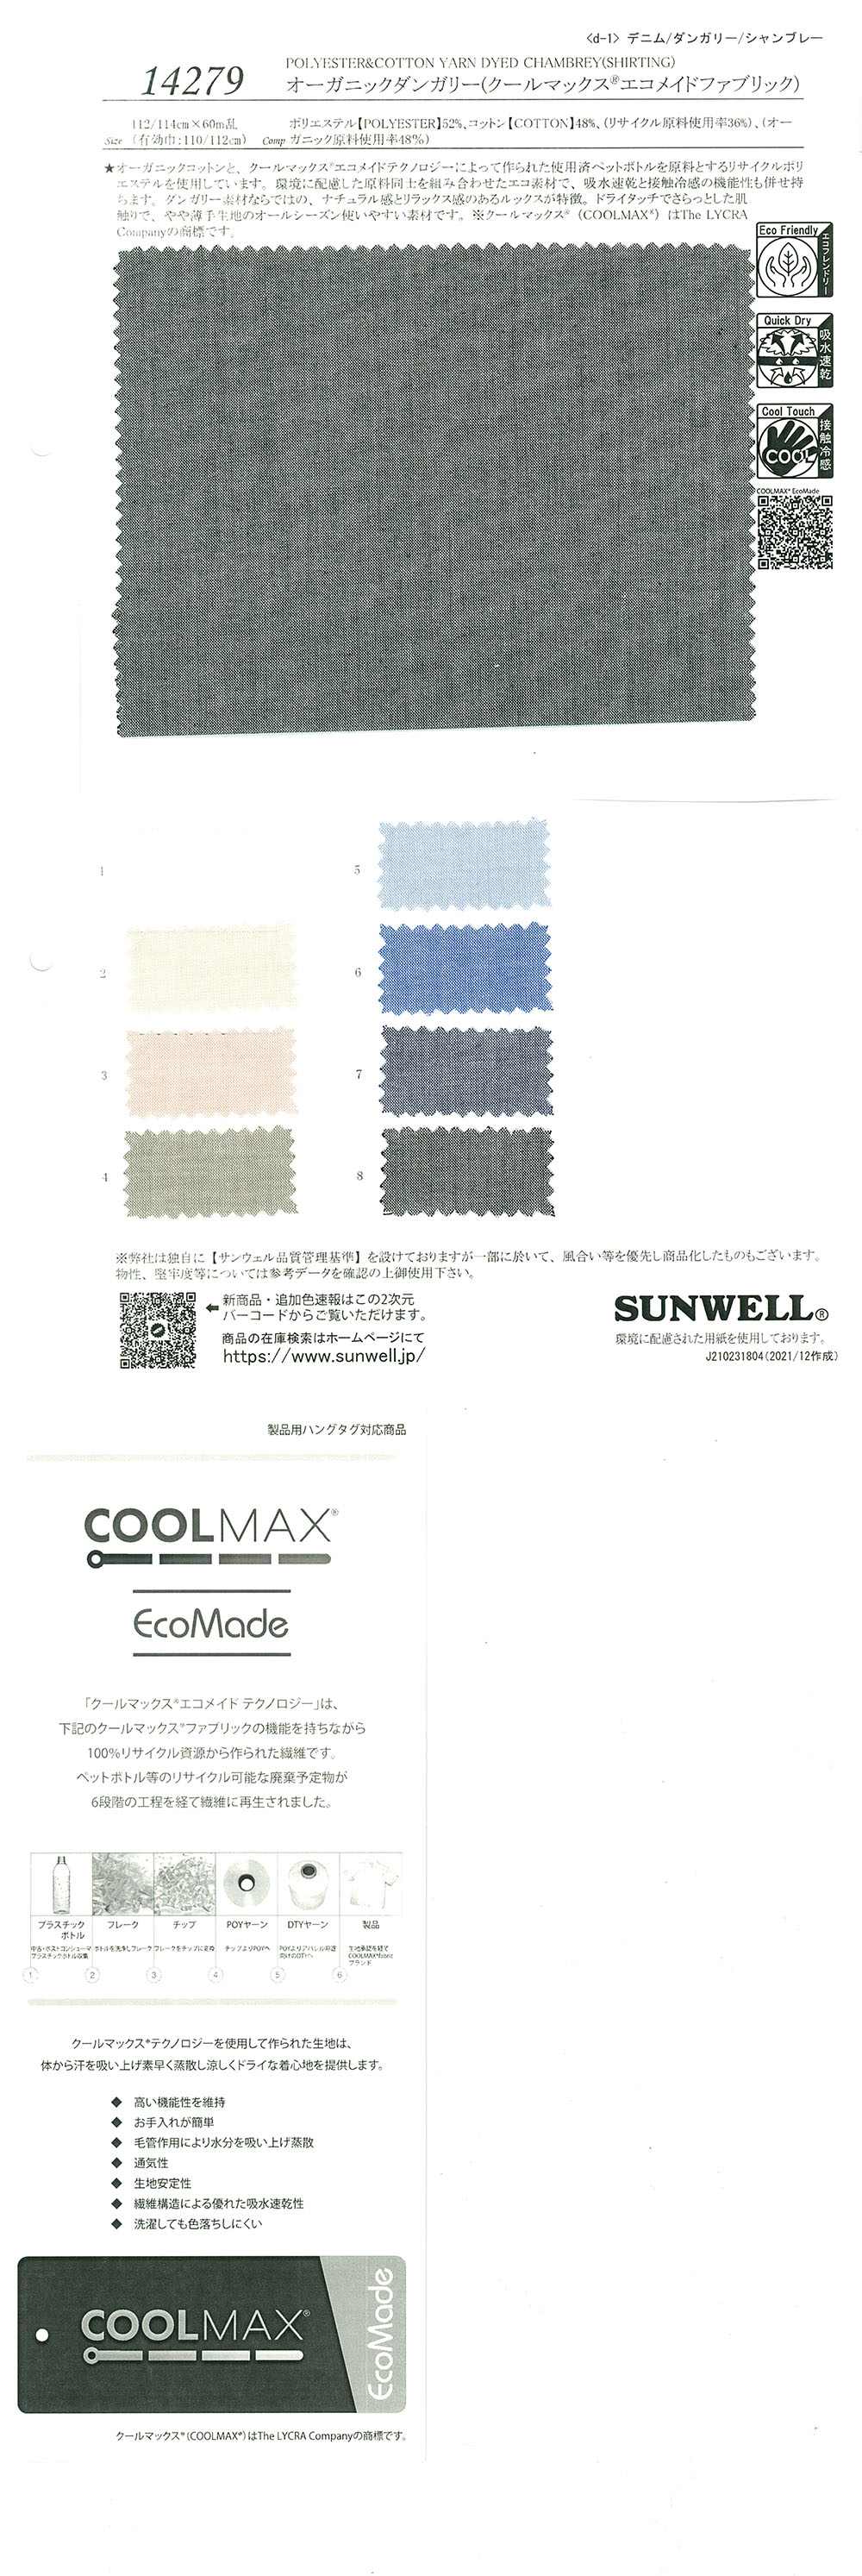 14279 Organic Dungaree(Coolmax(R) Eco-made Fabric)[Textile / Fabric] SUNWELL